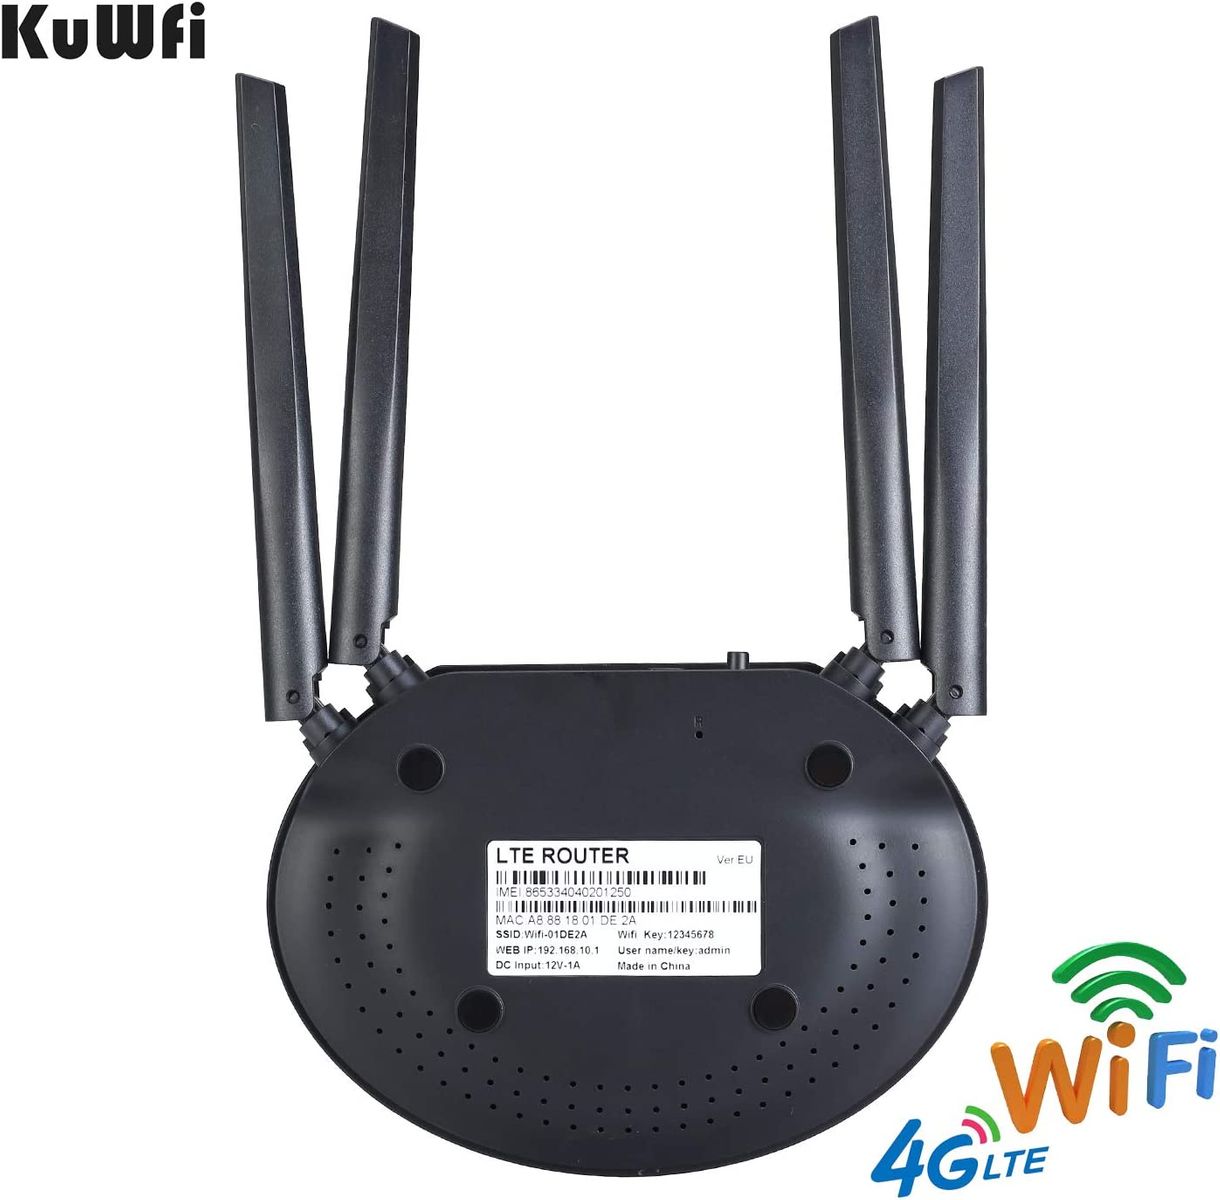 KuWFi Router 4G LTE WLAN CPE 4G LTE entsperrt 300 Mbit/s Slot für SIM-Karte 4 Stück leistungsstarke WiFi-Antenne nicht abnehmbar Cat4 150 Mbps Wi-Fi teilen 32 Benutzer